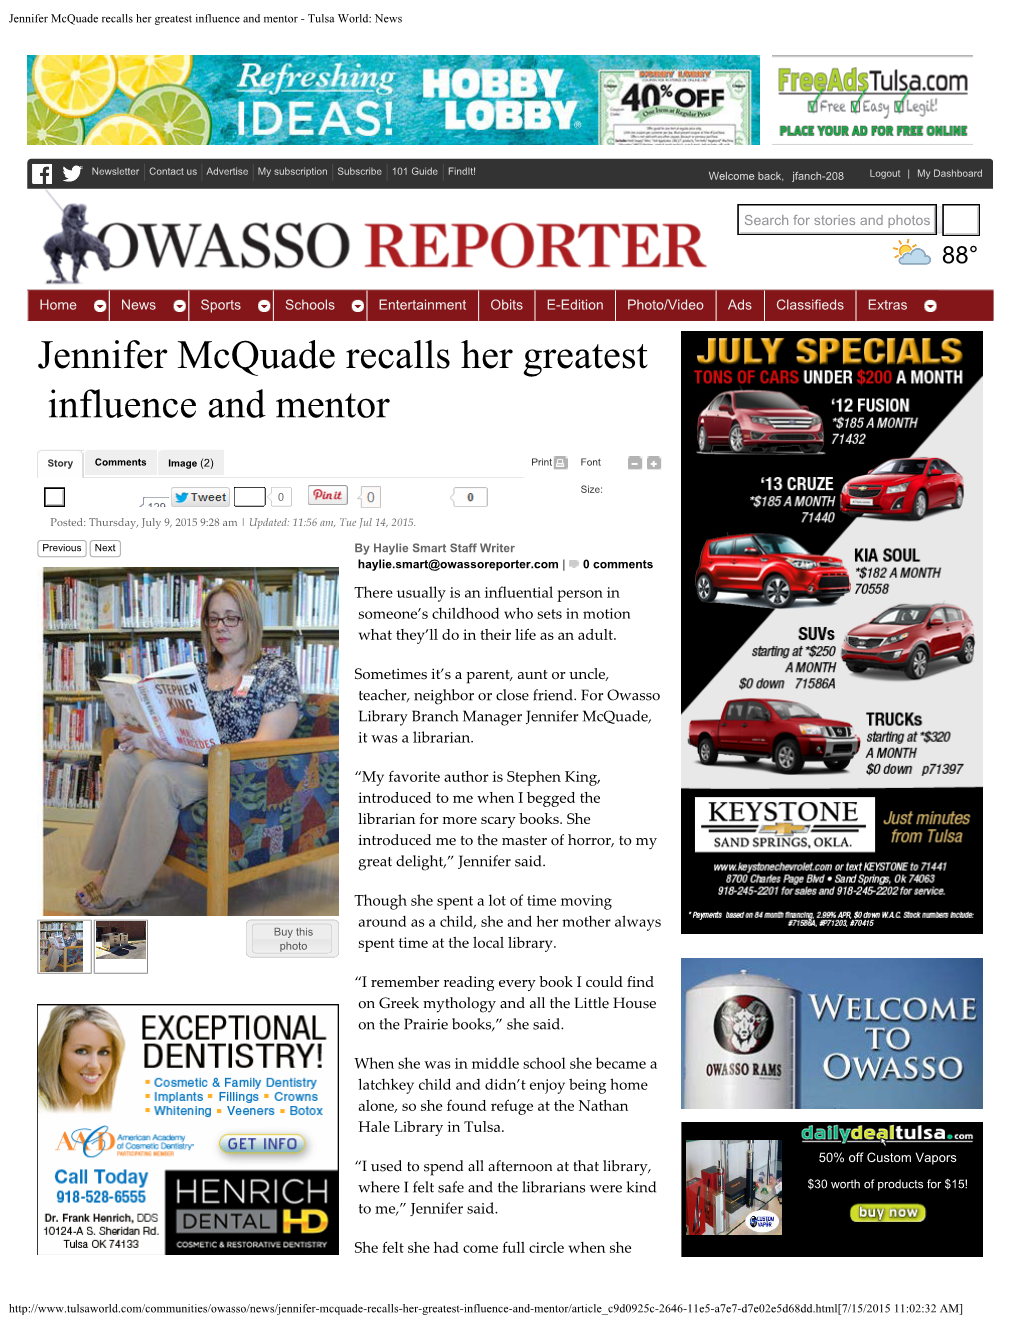 Jennifer Mcquade Recalls Her Greatest Influence and Mentor - Tulsa World: News